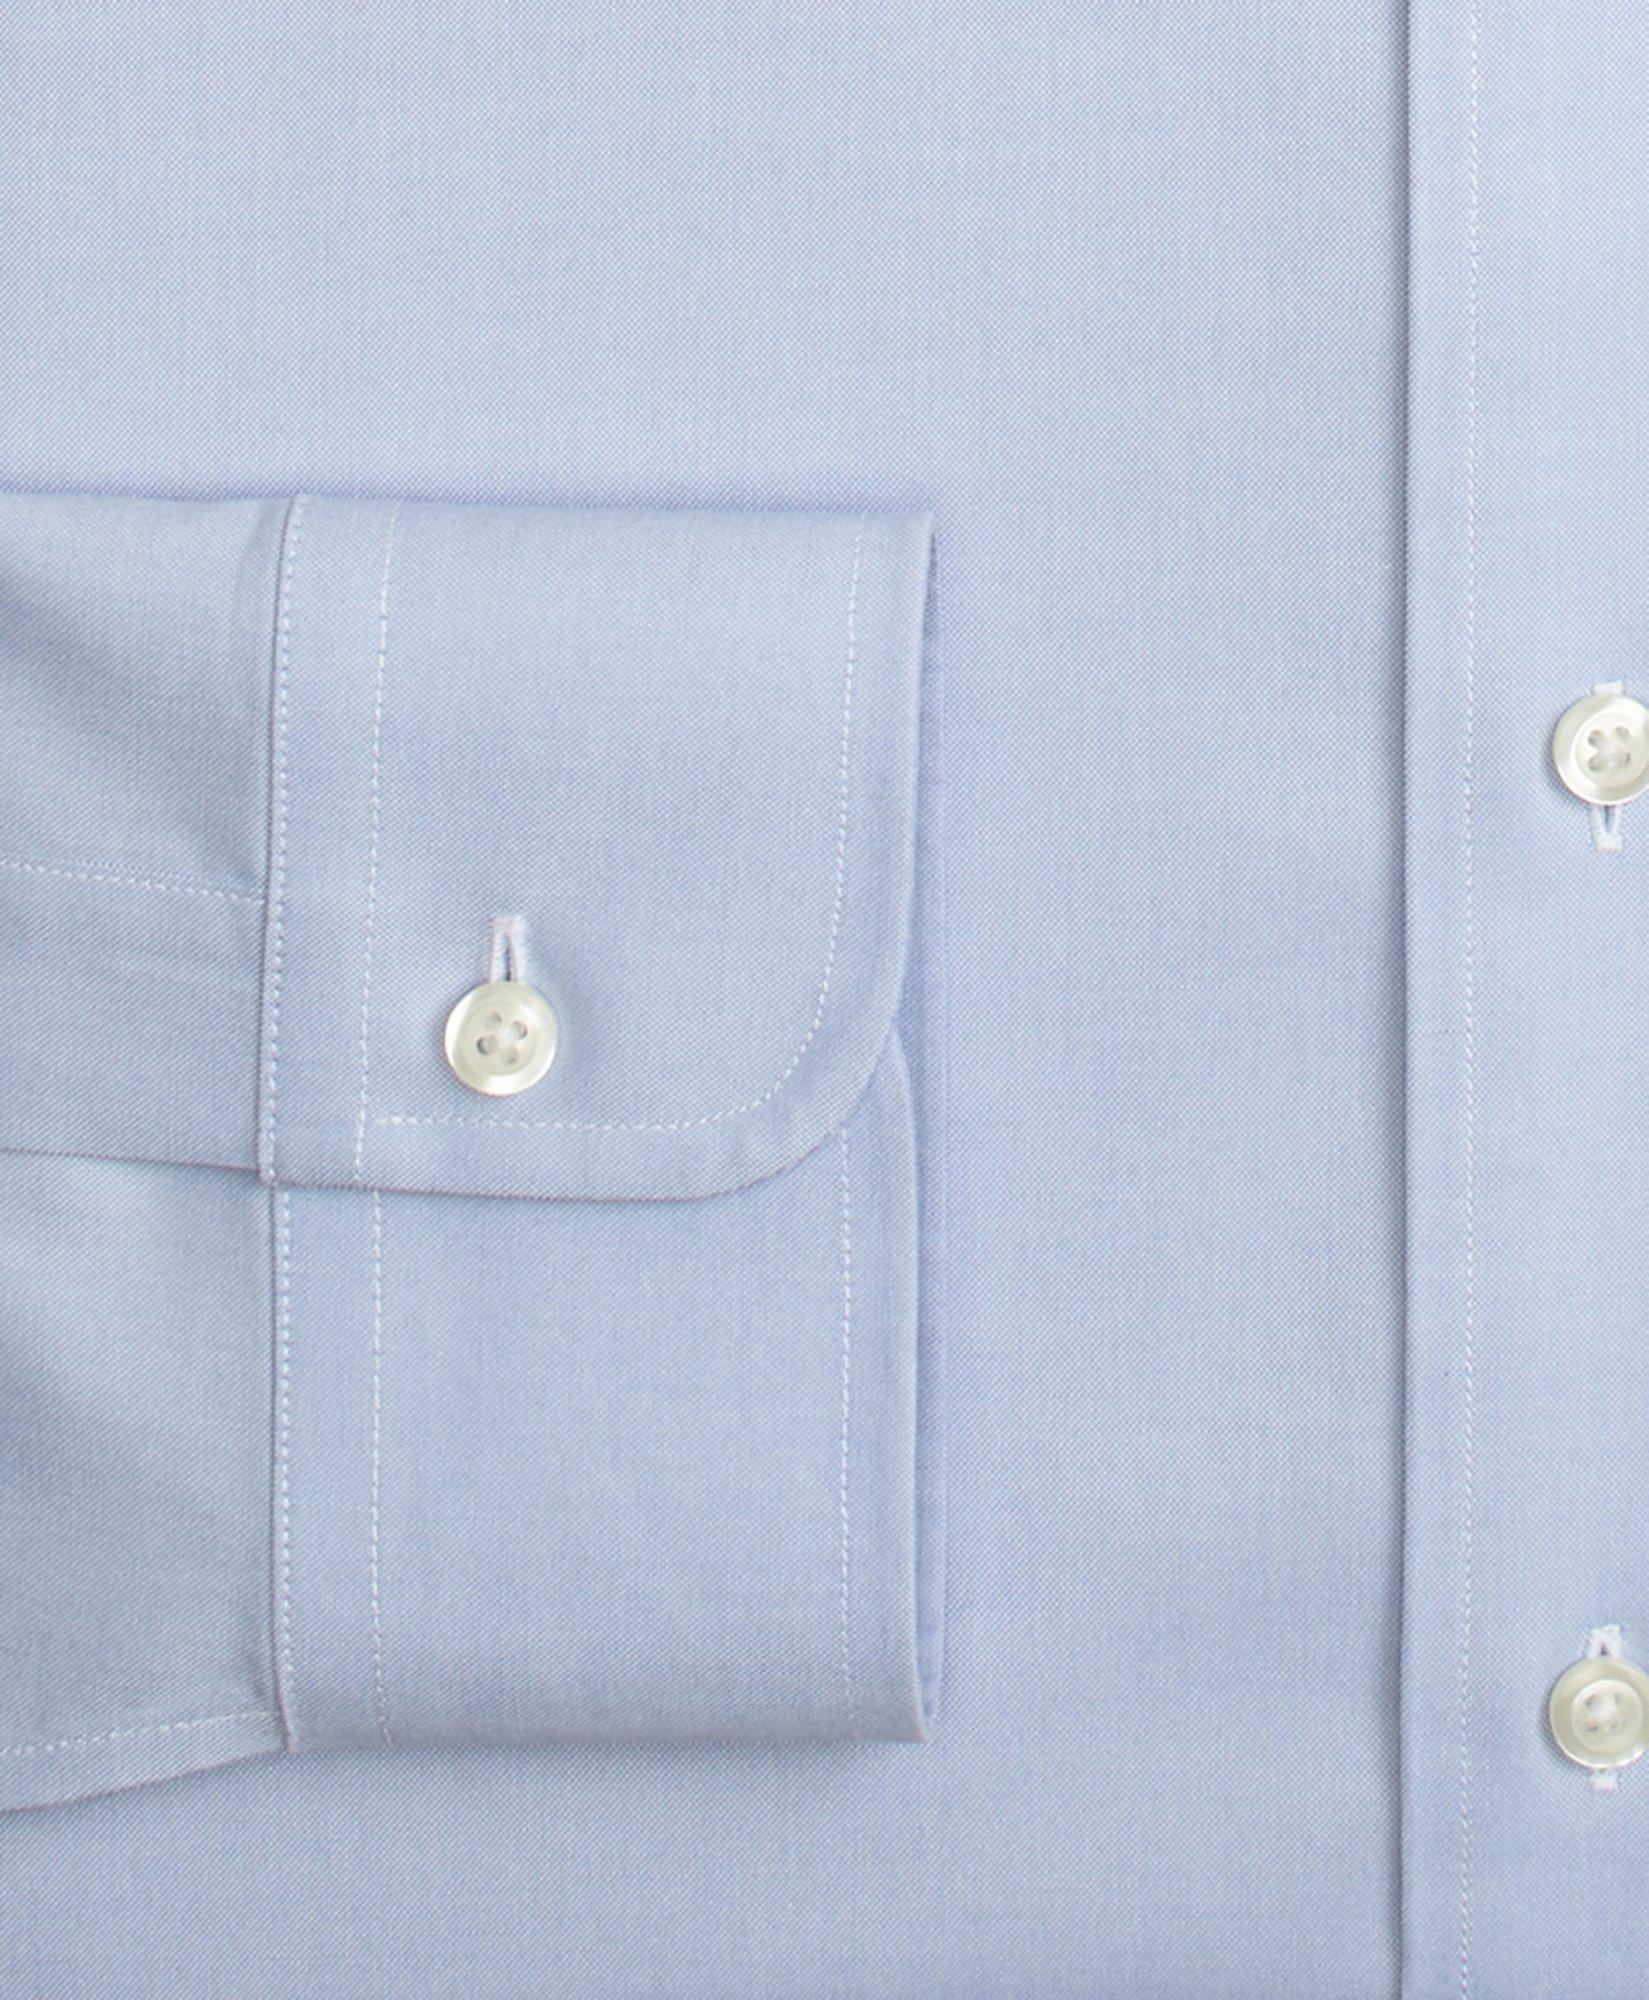 Stretch Big & Tall Dress Shirt, Non-Iron Pinpoint Button-Down Collar